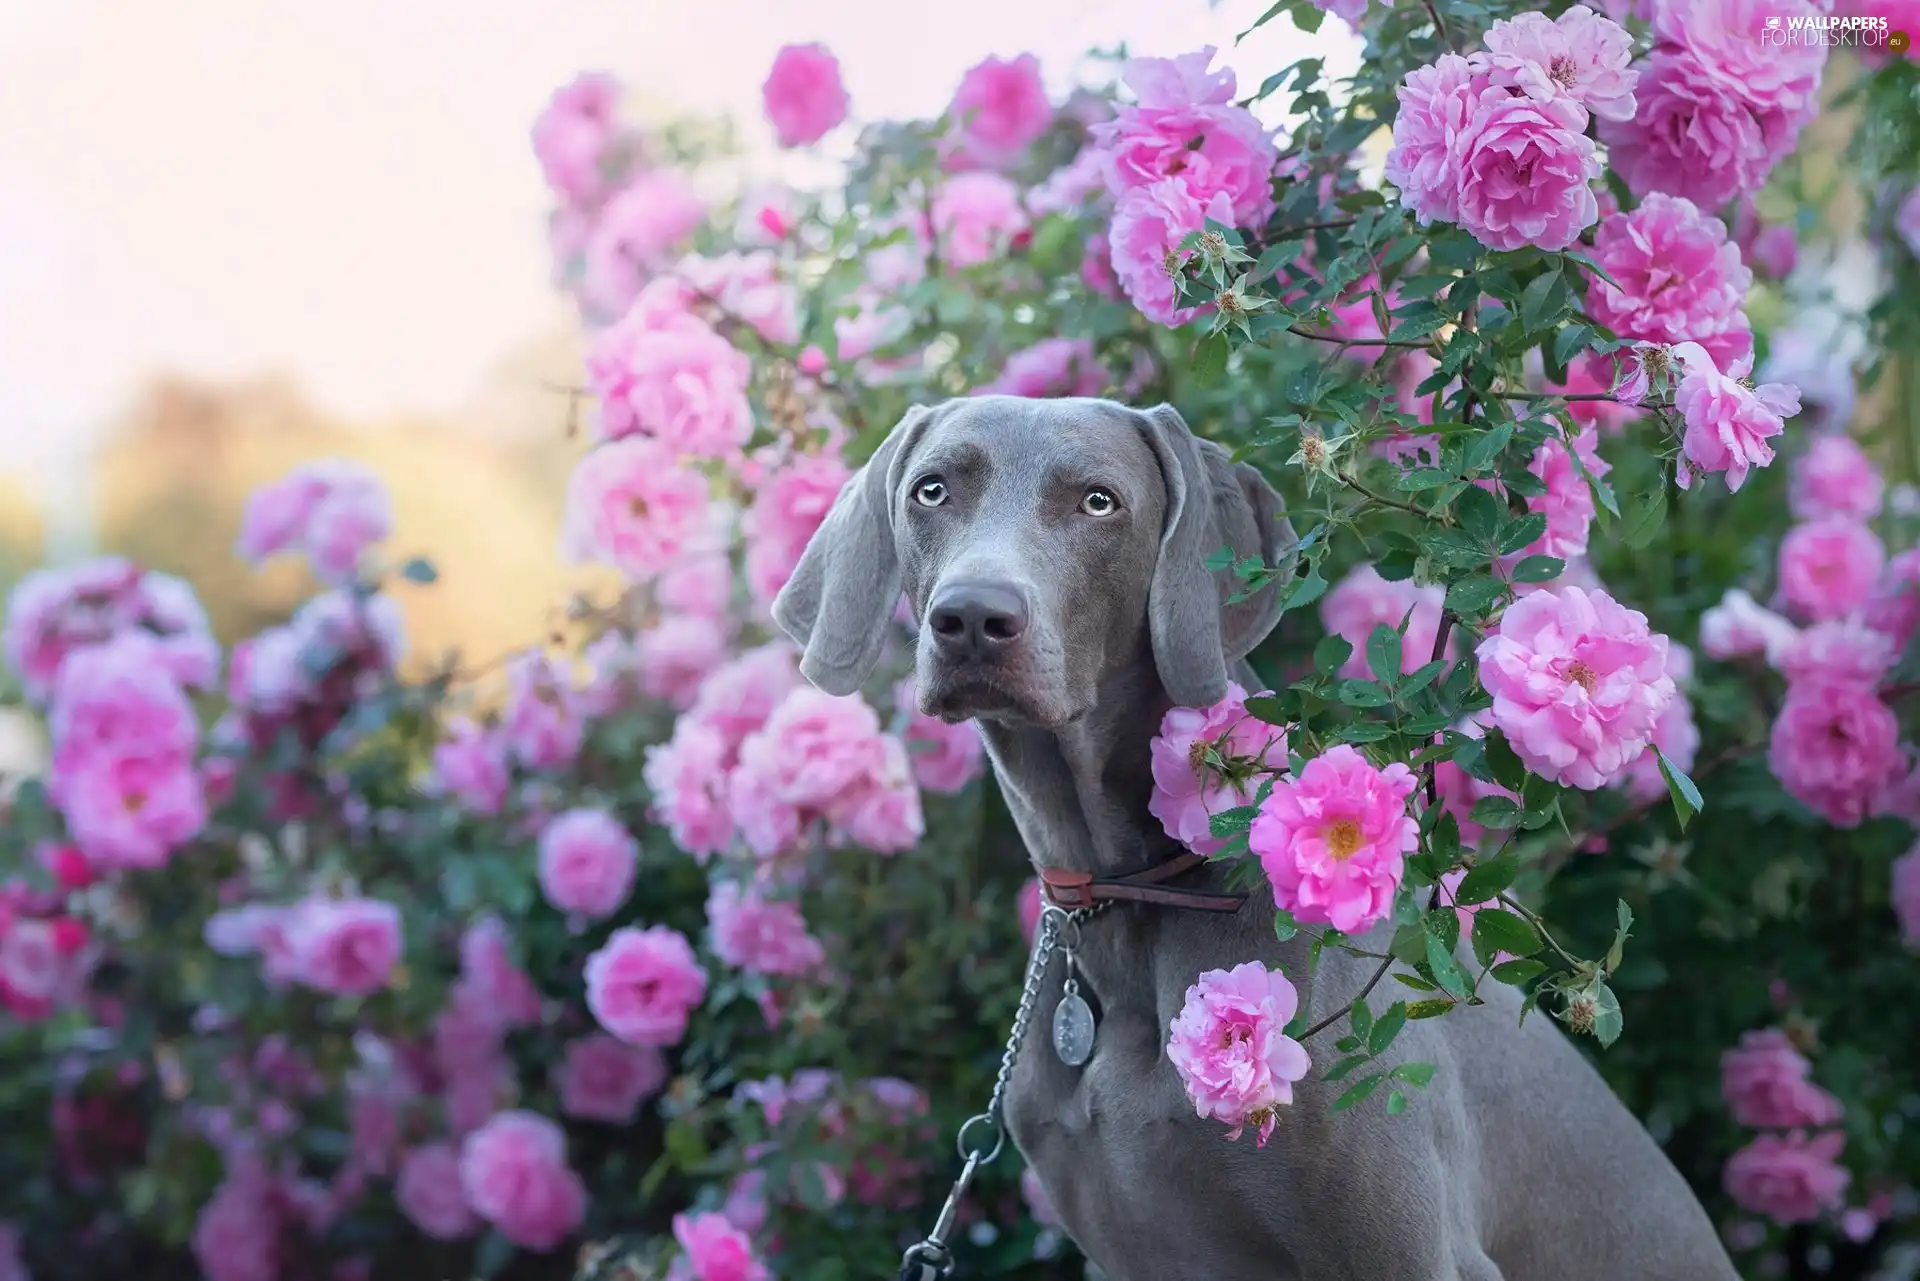 roses, Bush, Weimaraner, Flowers, dog